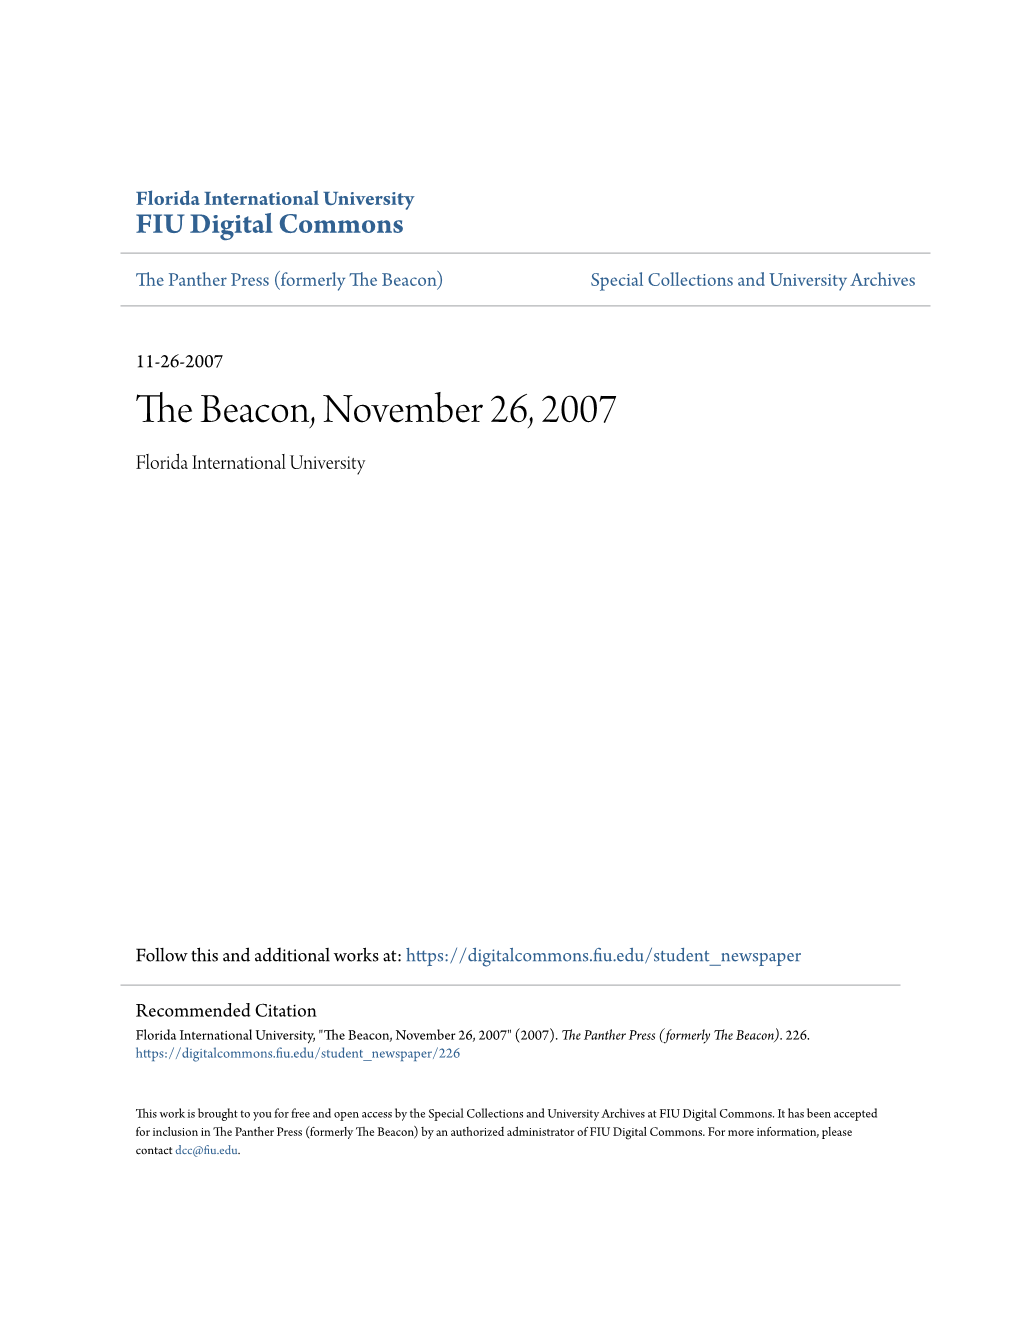 The Beacon, November 26, 2007 Florida International University